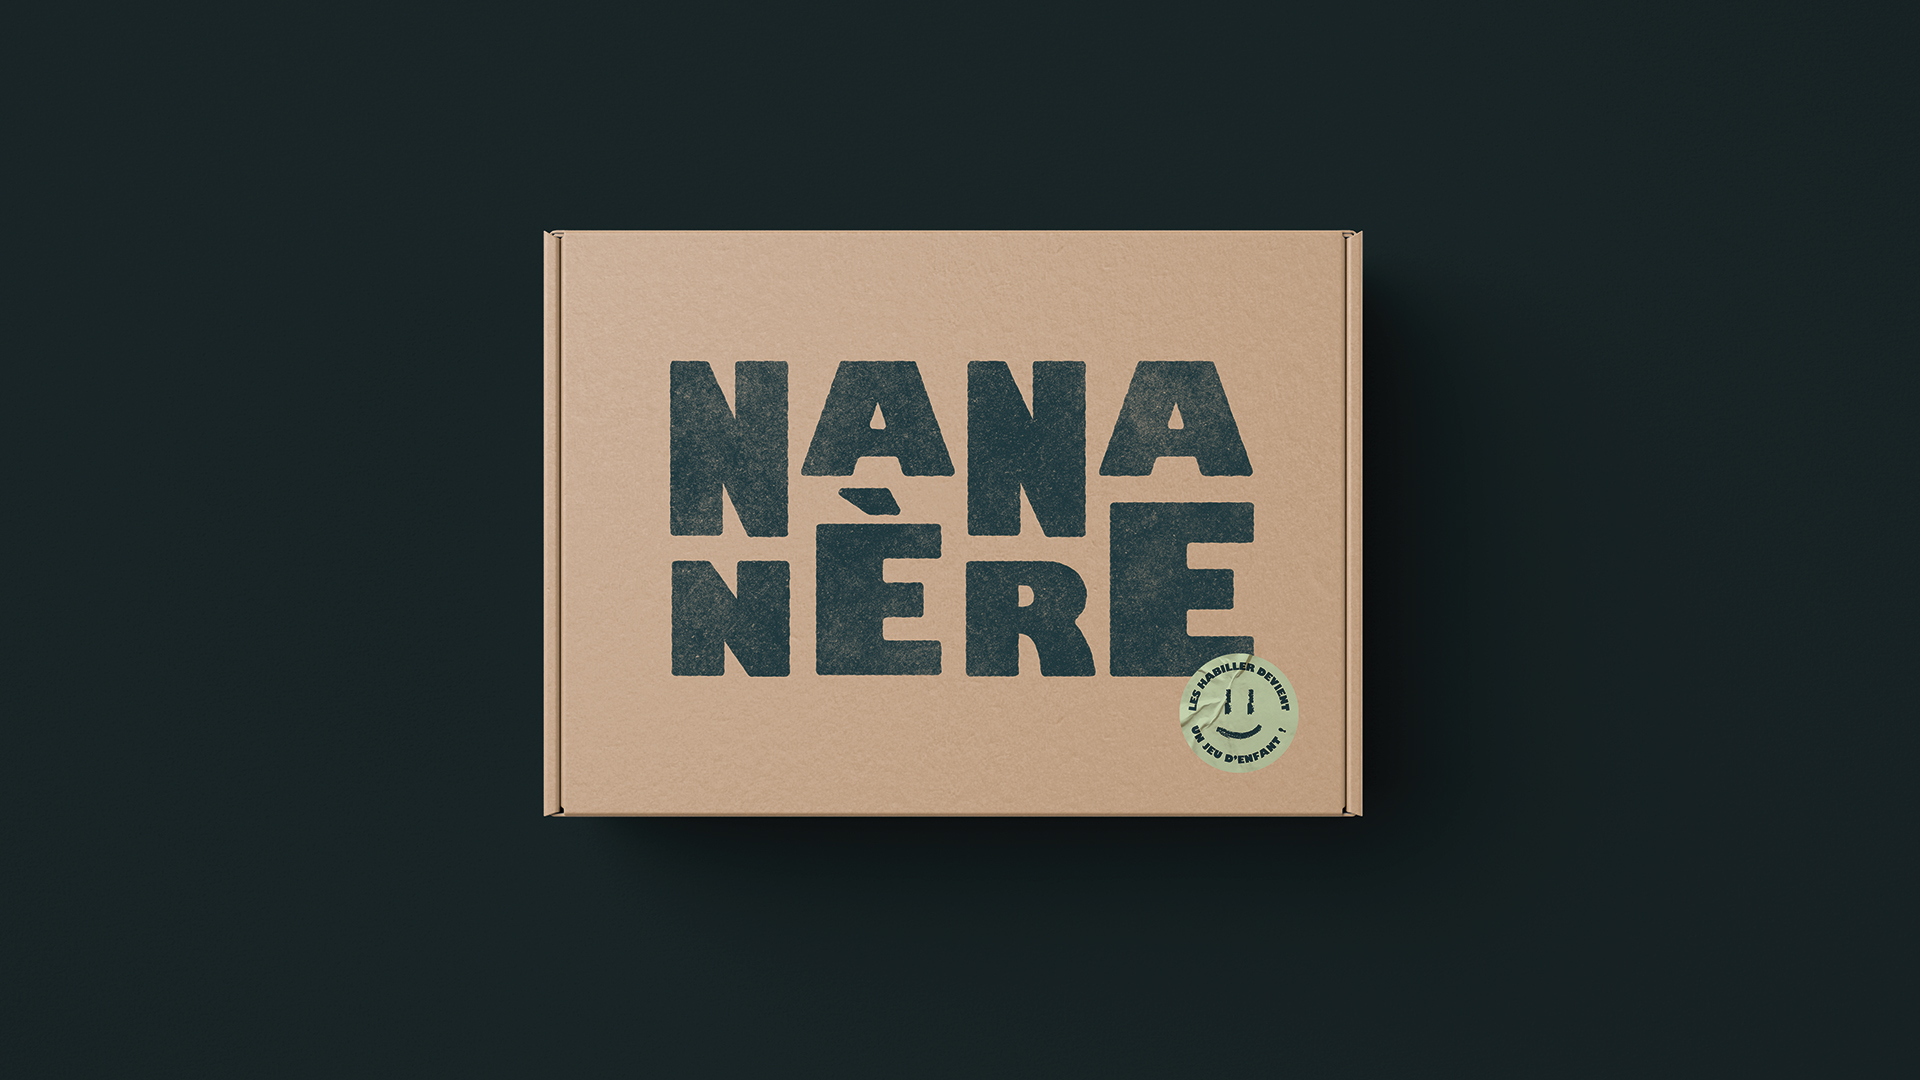 Nana-nère